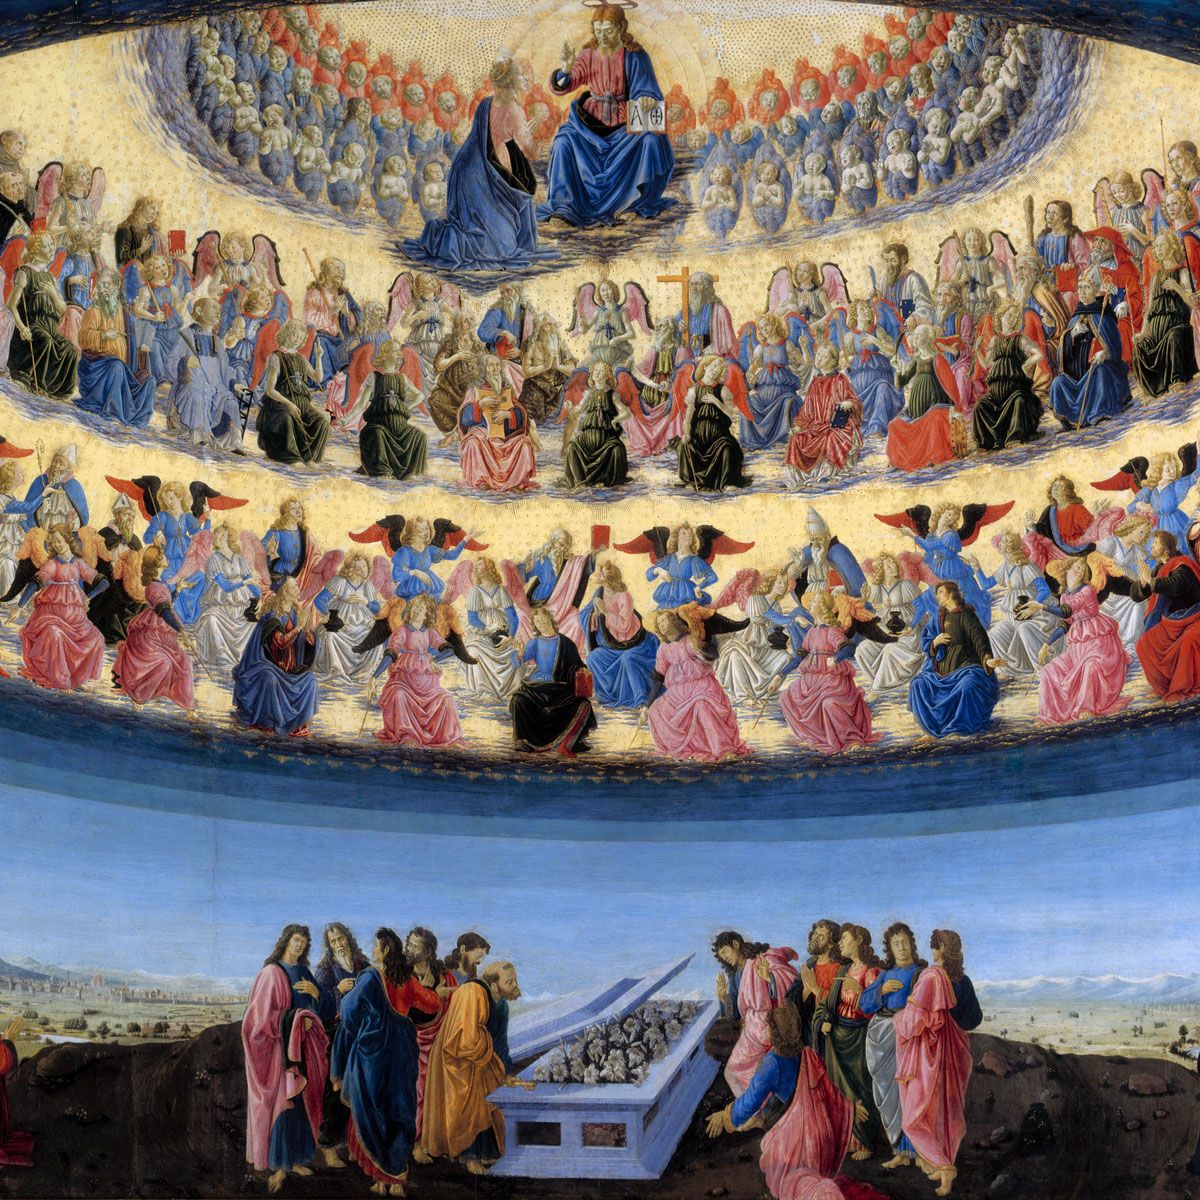 Francesco Botticini, The Assumption of the Virgin